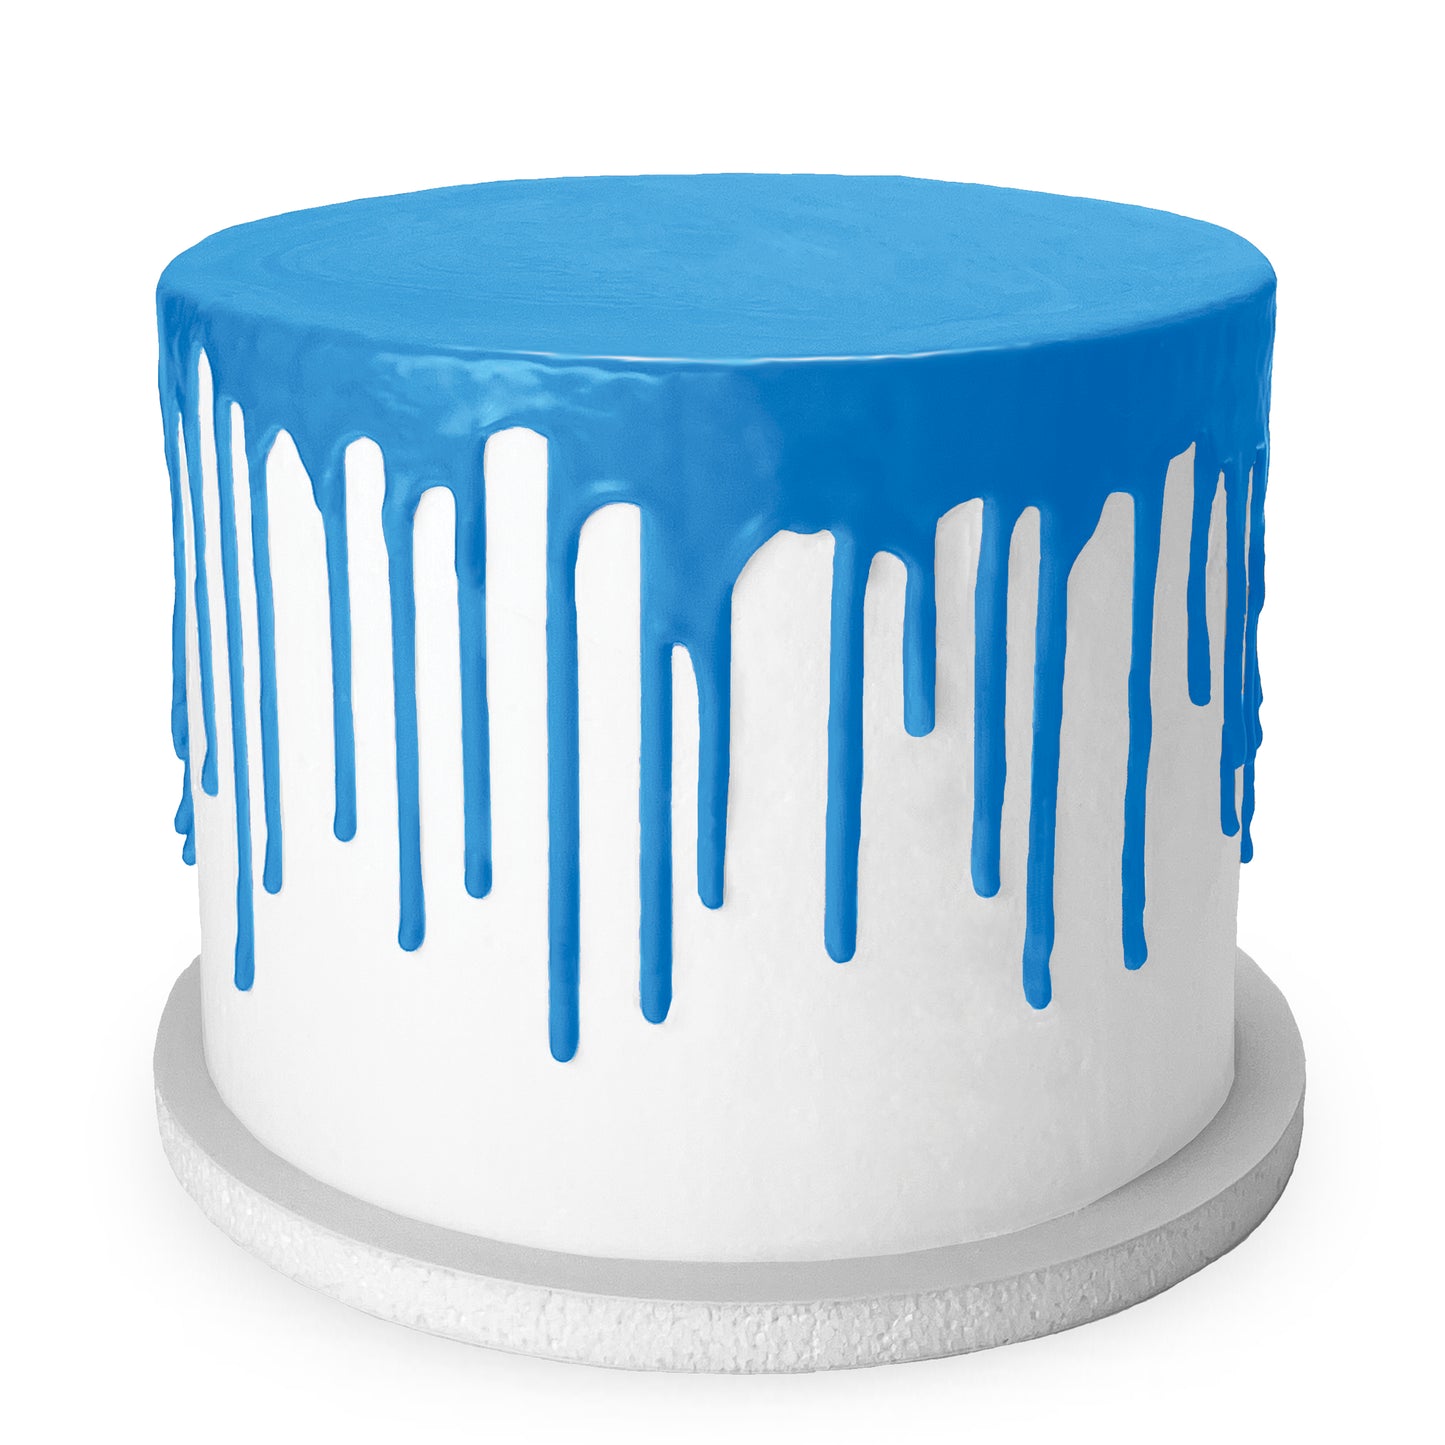 Satin Ice Blue Cake Drip - 8.8 oz Bottle